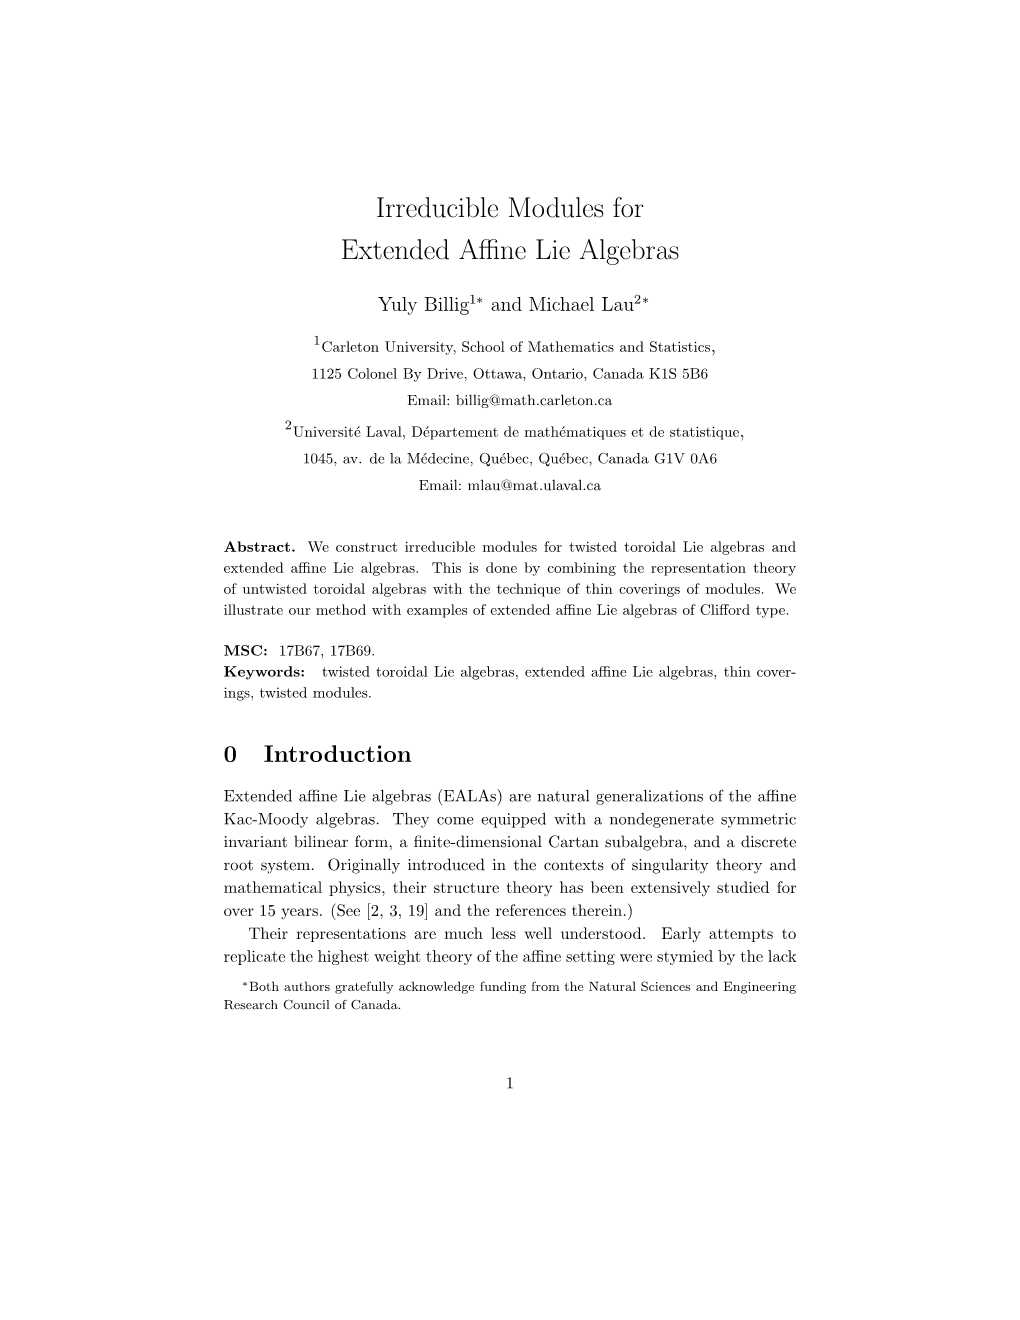 Irreducible Modules for Extended Affine Lie Algebras